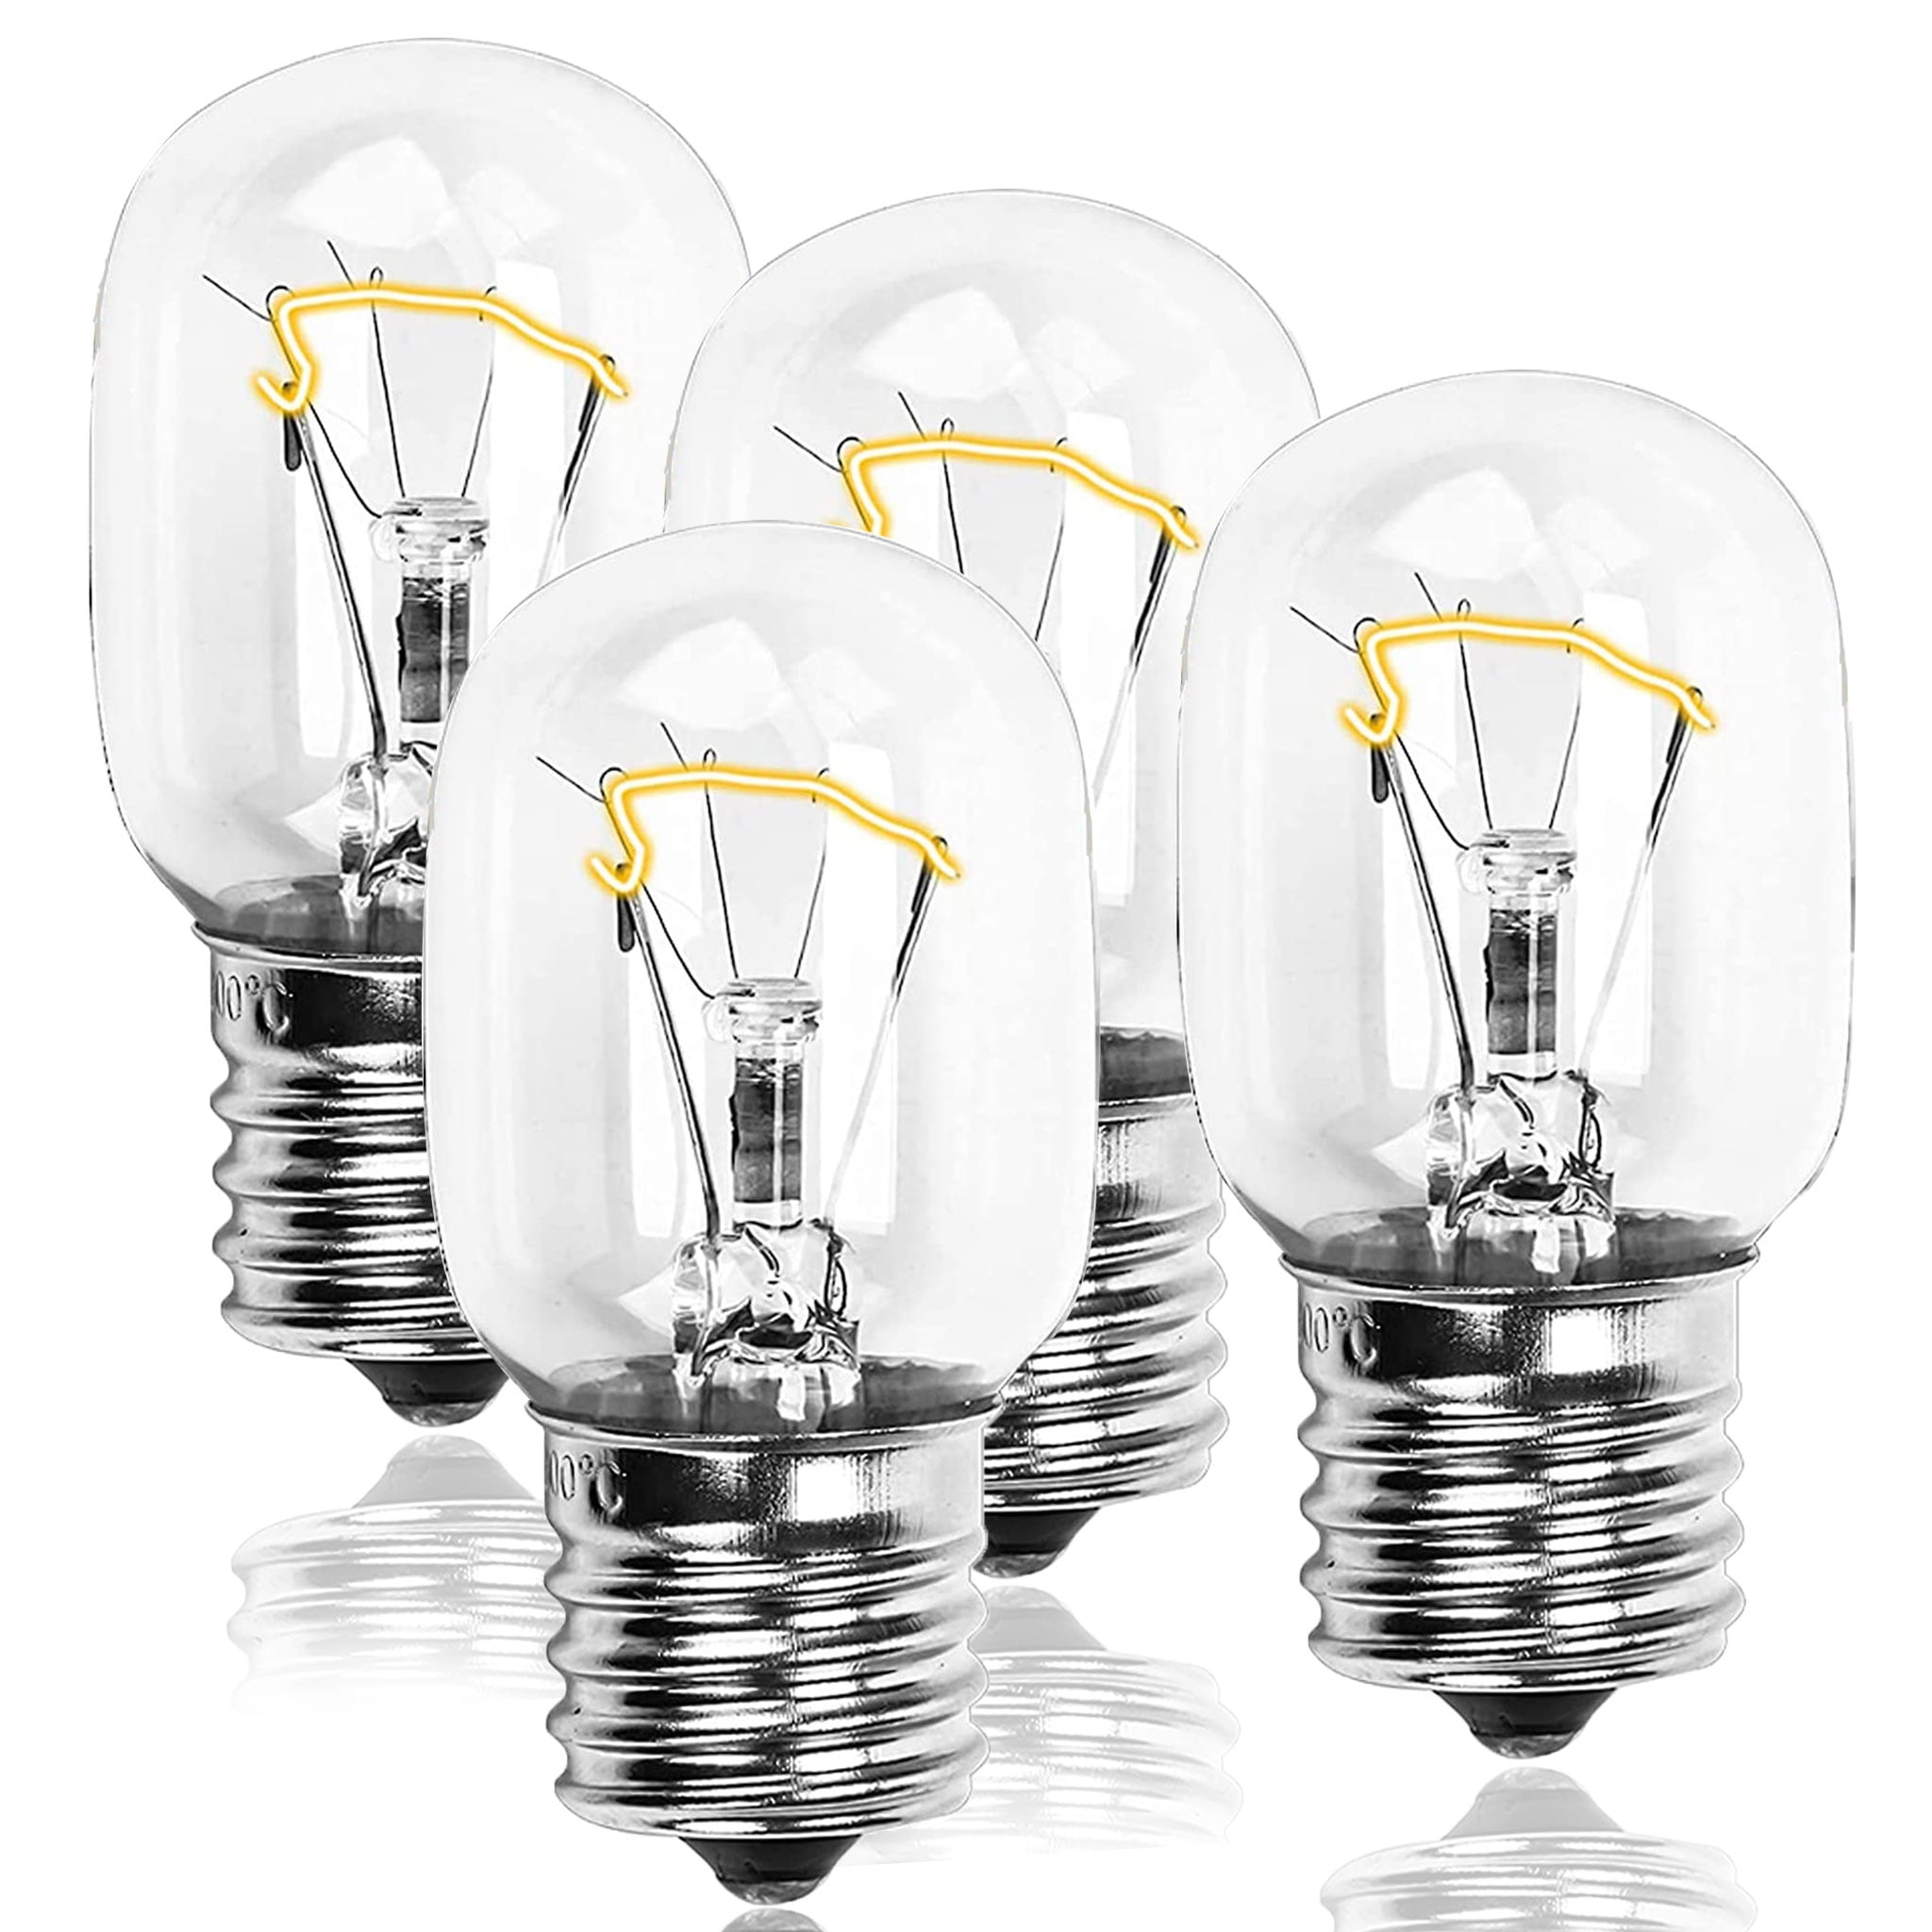 Microwave Light Bulbs Under Hood Dimmable, E17 LED Bulbs 3W Replace 120V  40W Appliance Bulb Over Stove, Whirlpool Microwave Light Bulb, KEI 8206232a